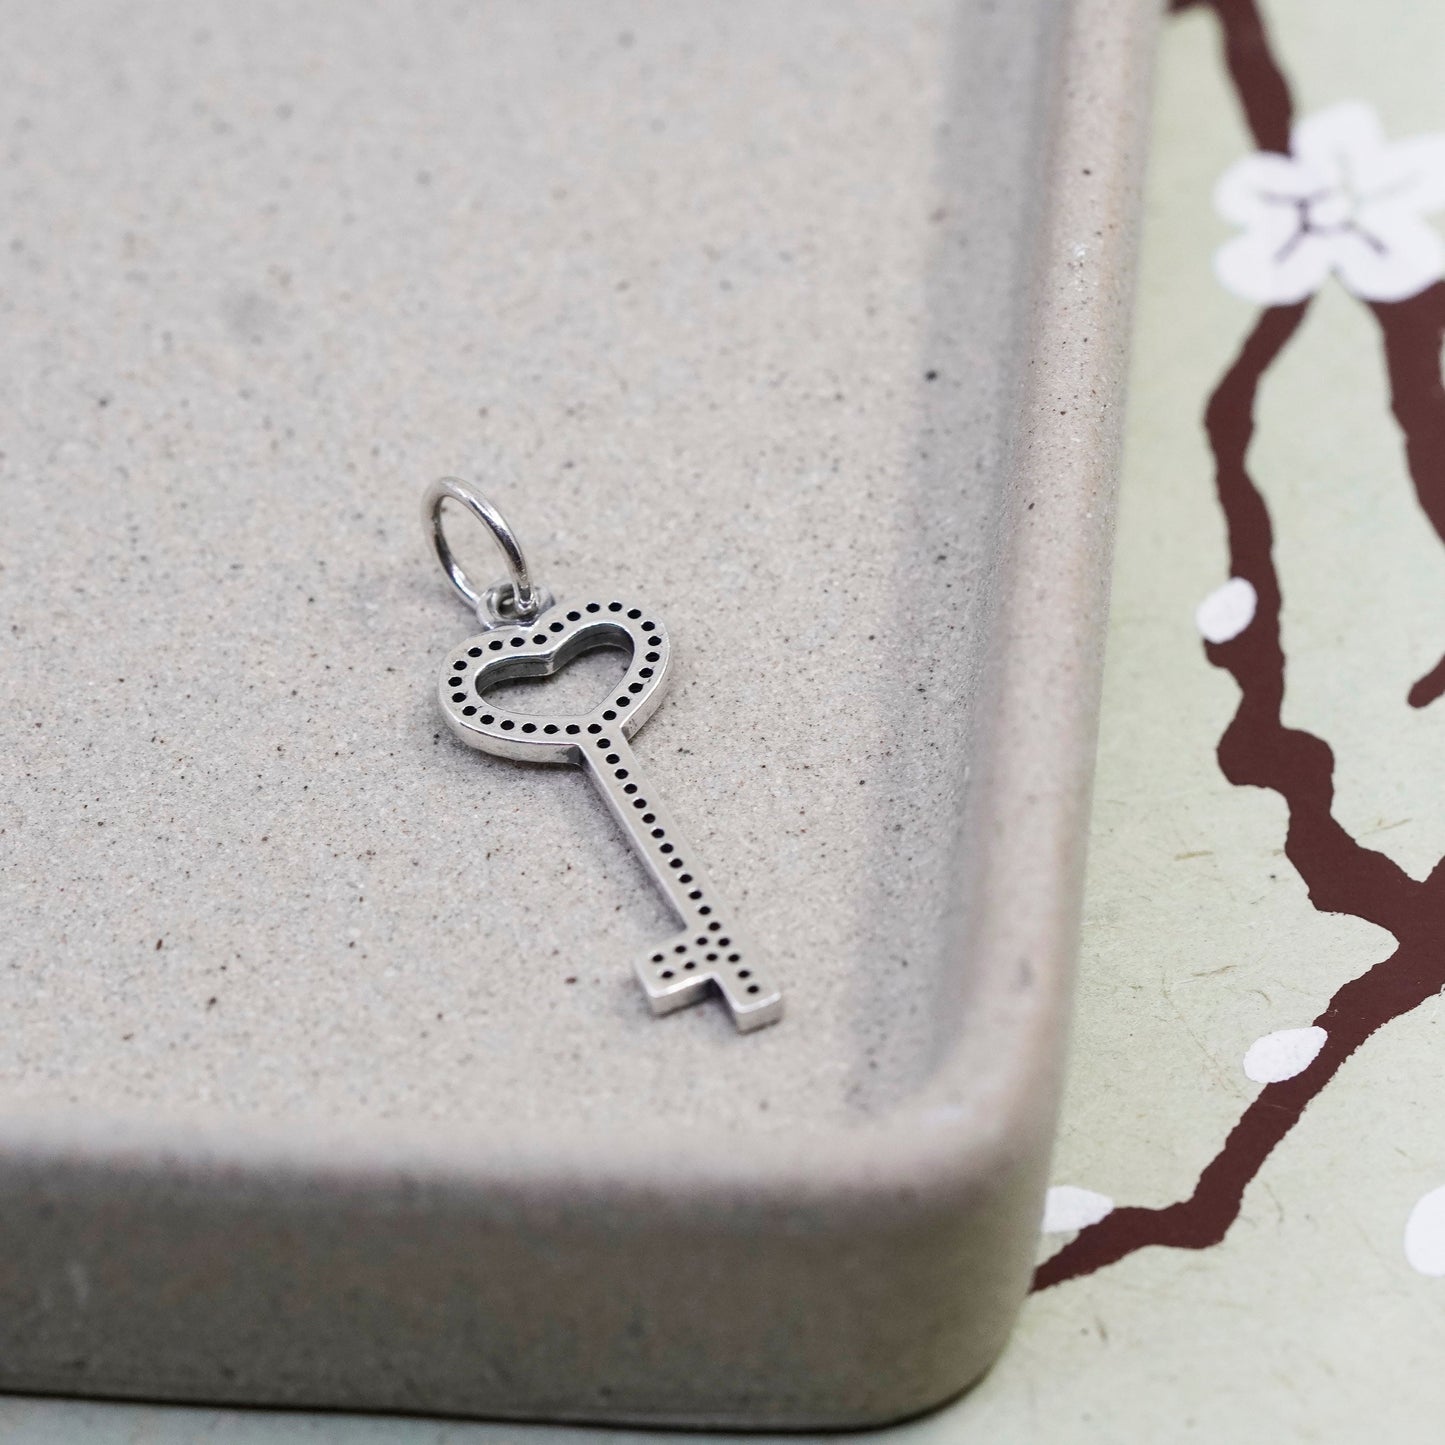 Vintage sterling silver key with cz crystal pendant, 925 key charm